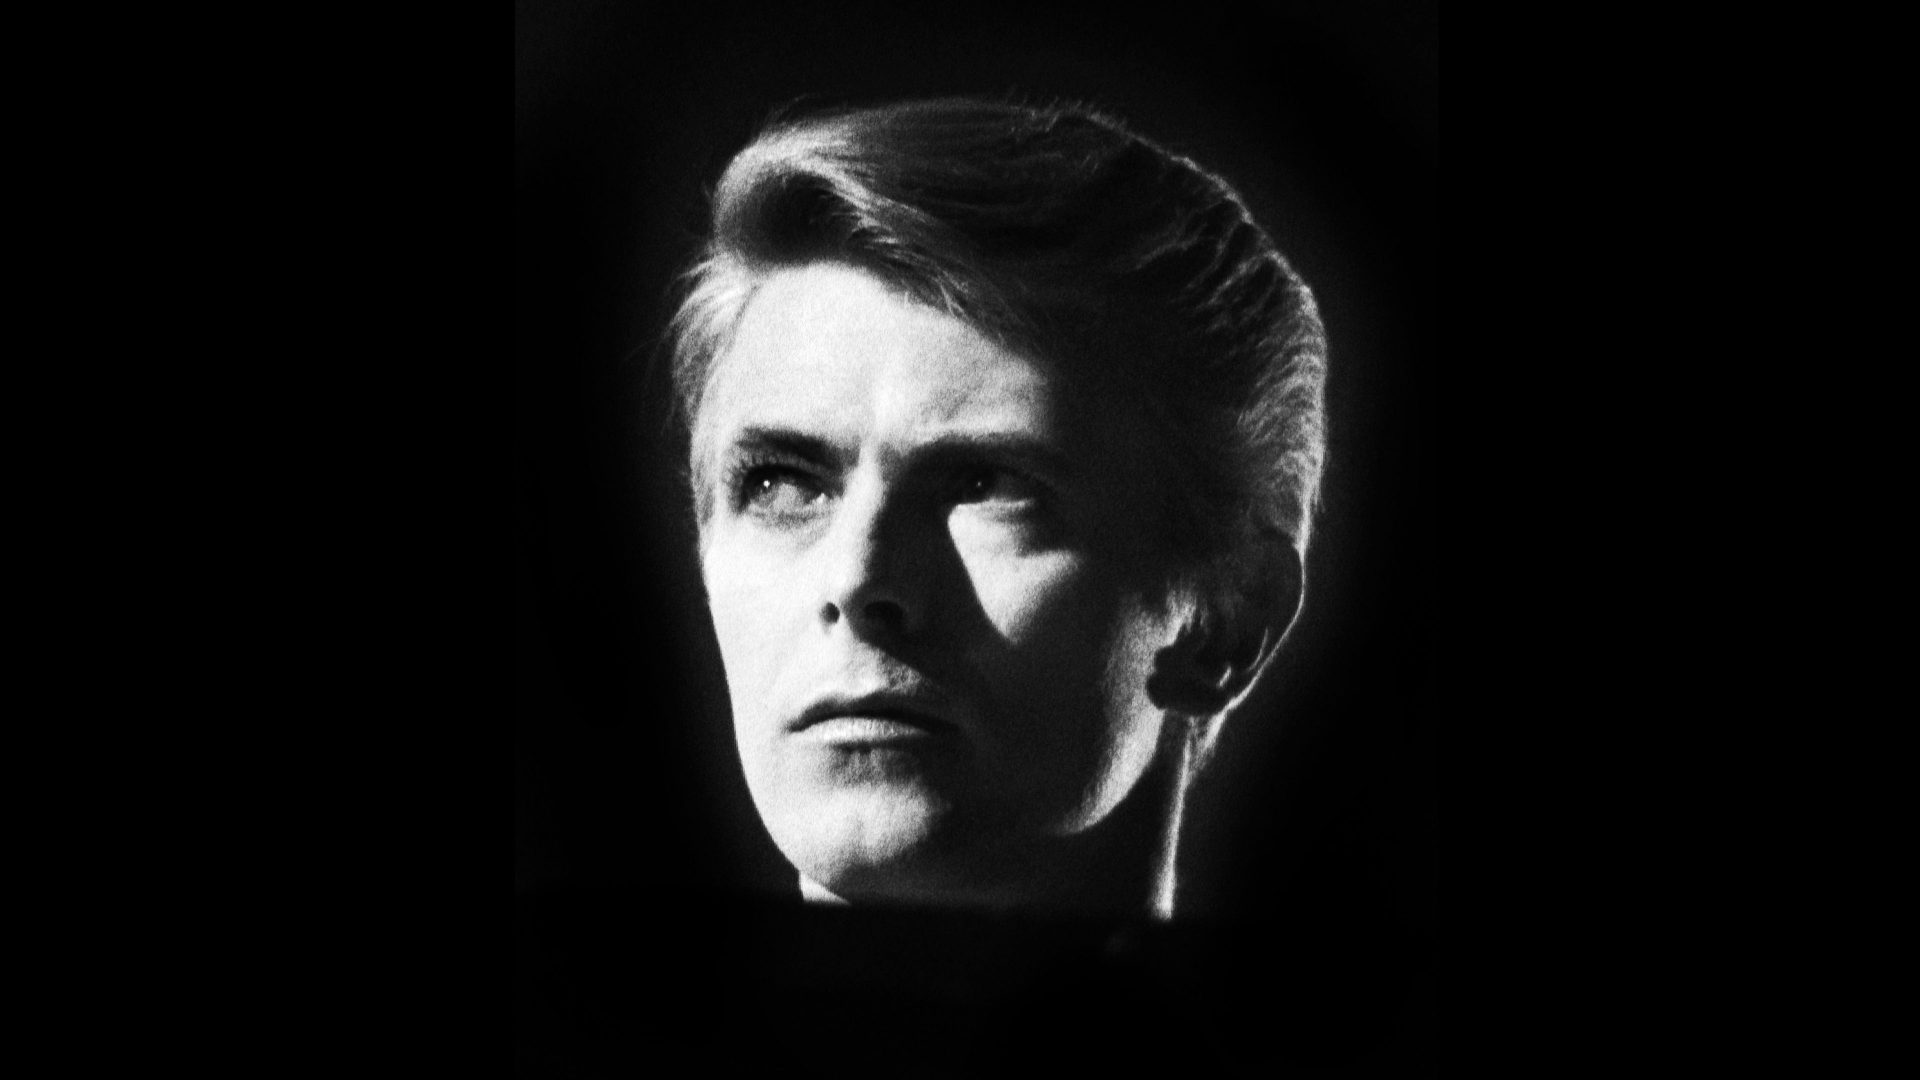 David Bowie, taken by Kevin Cummins in Stafford, 1978